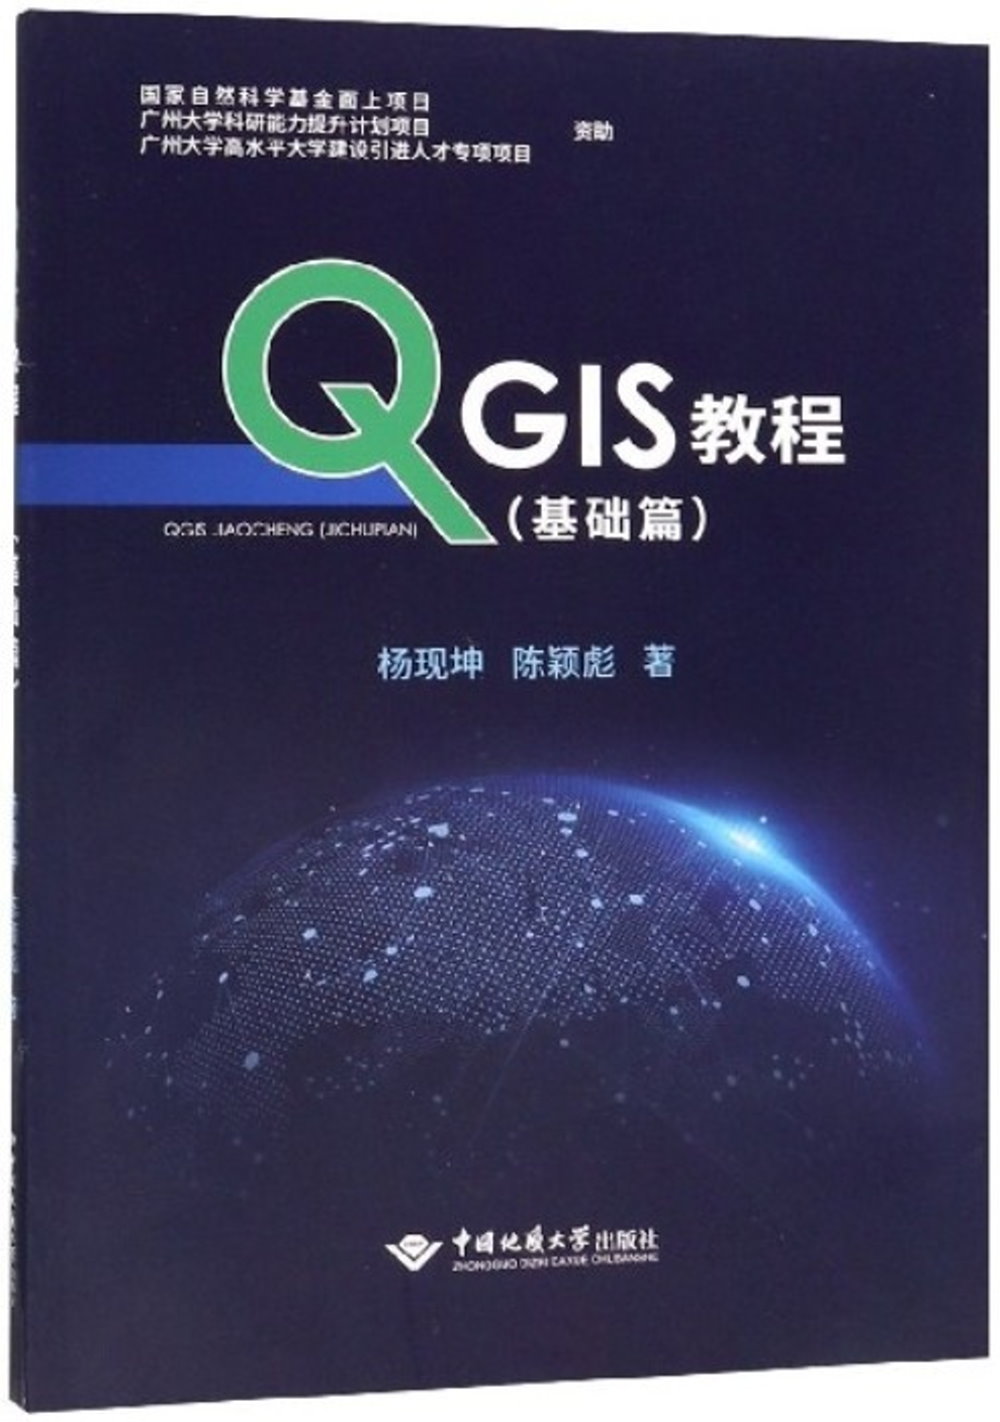 QGIS教程（基礎篇）